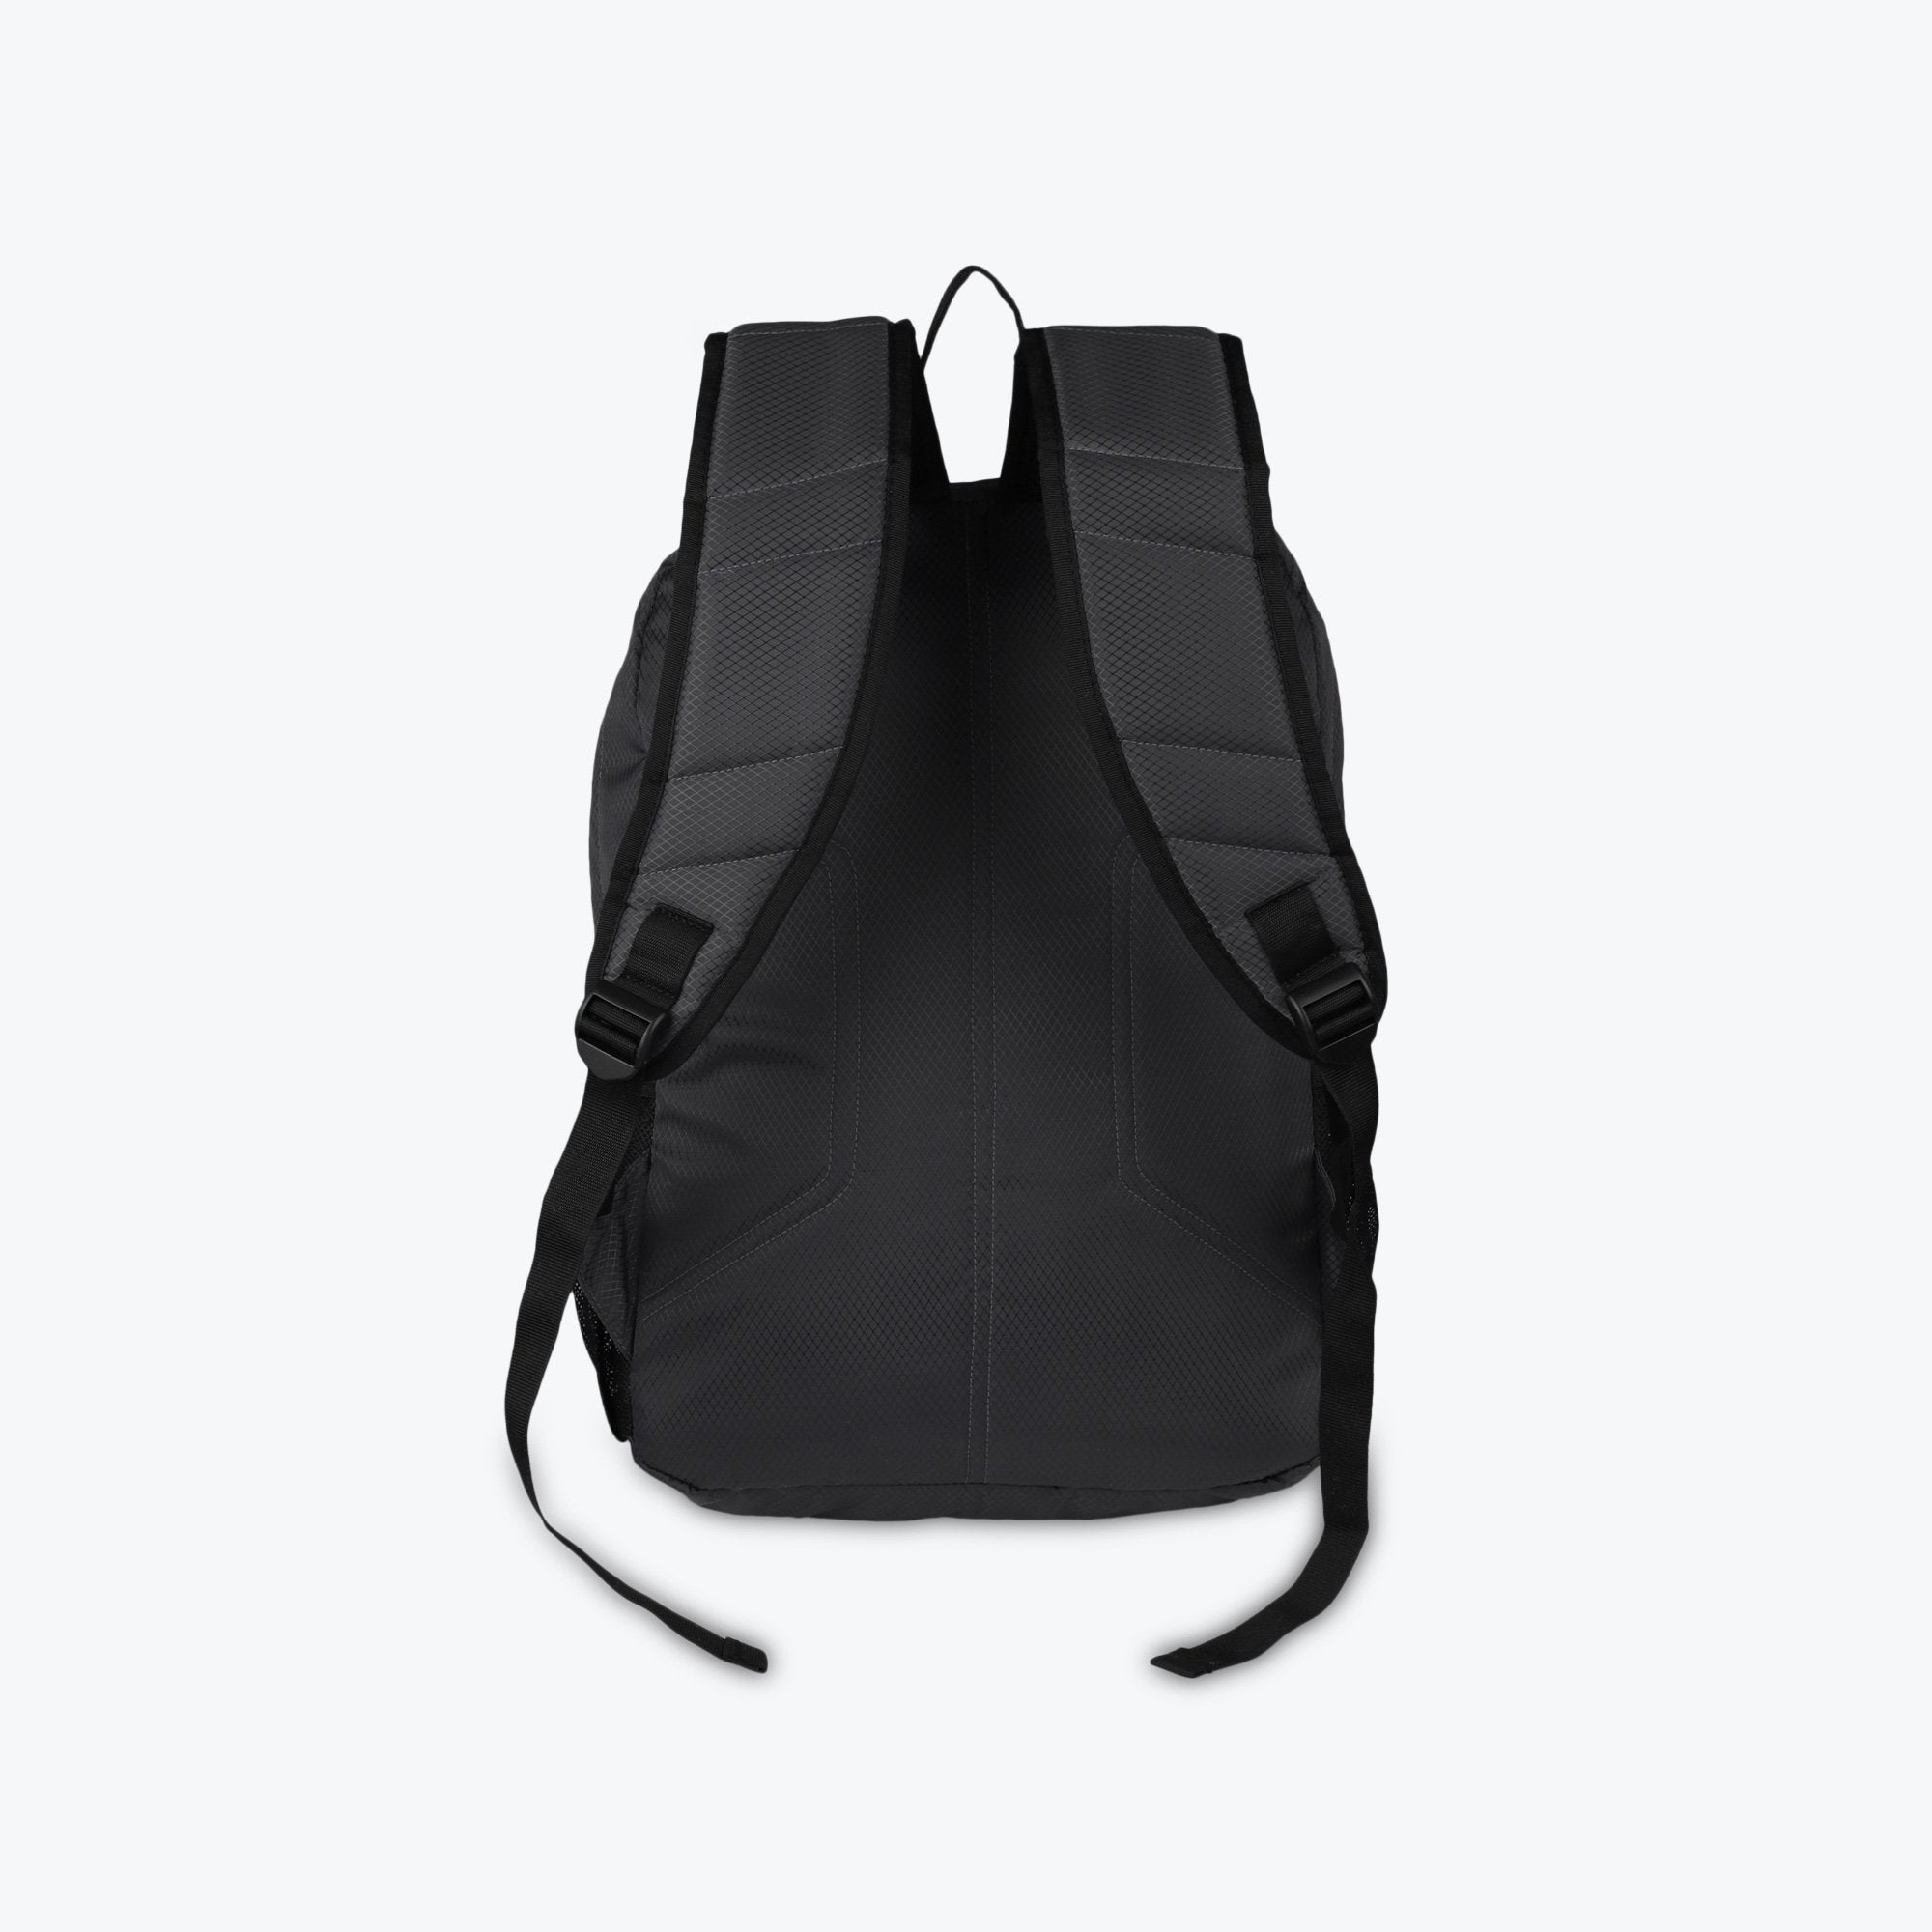 Grey-Green | Protecta Bolt Laptop Backpack-3